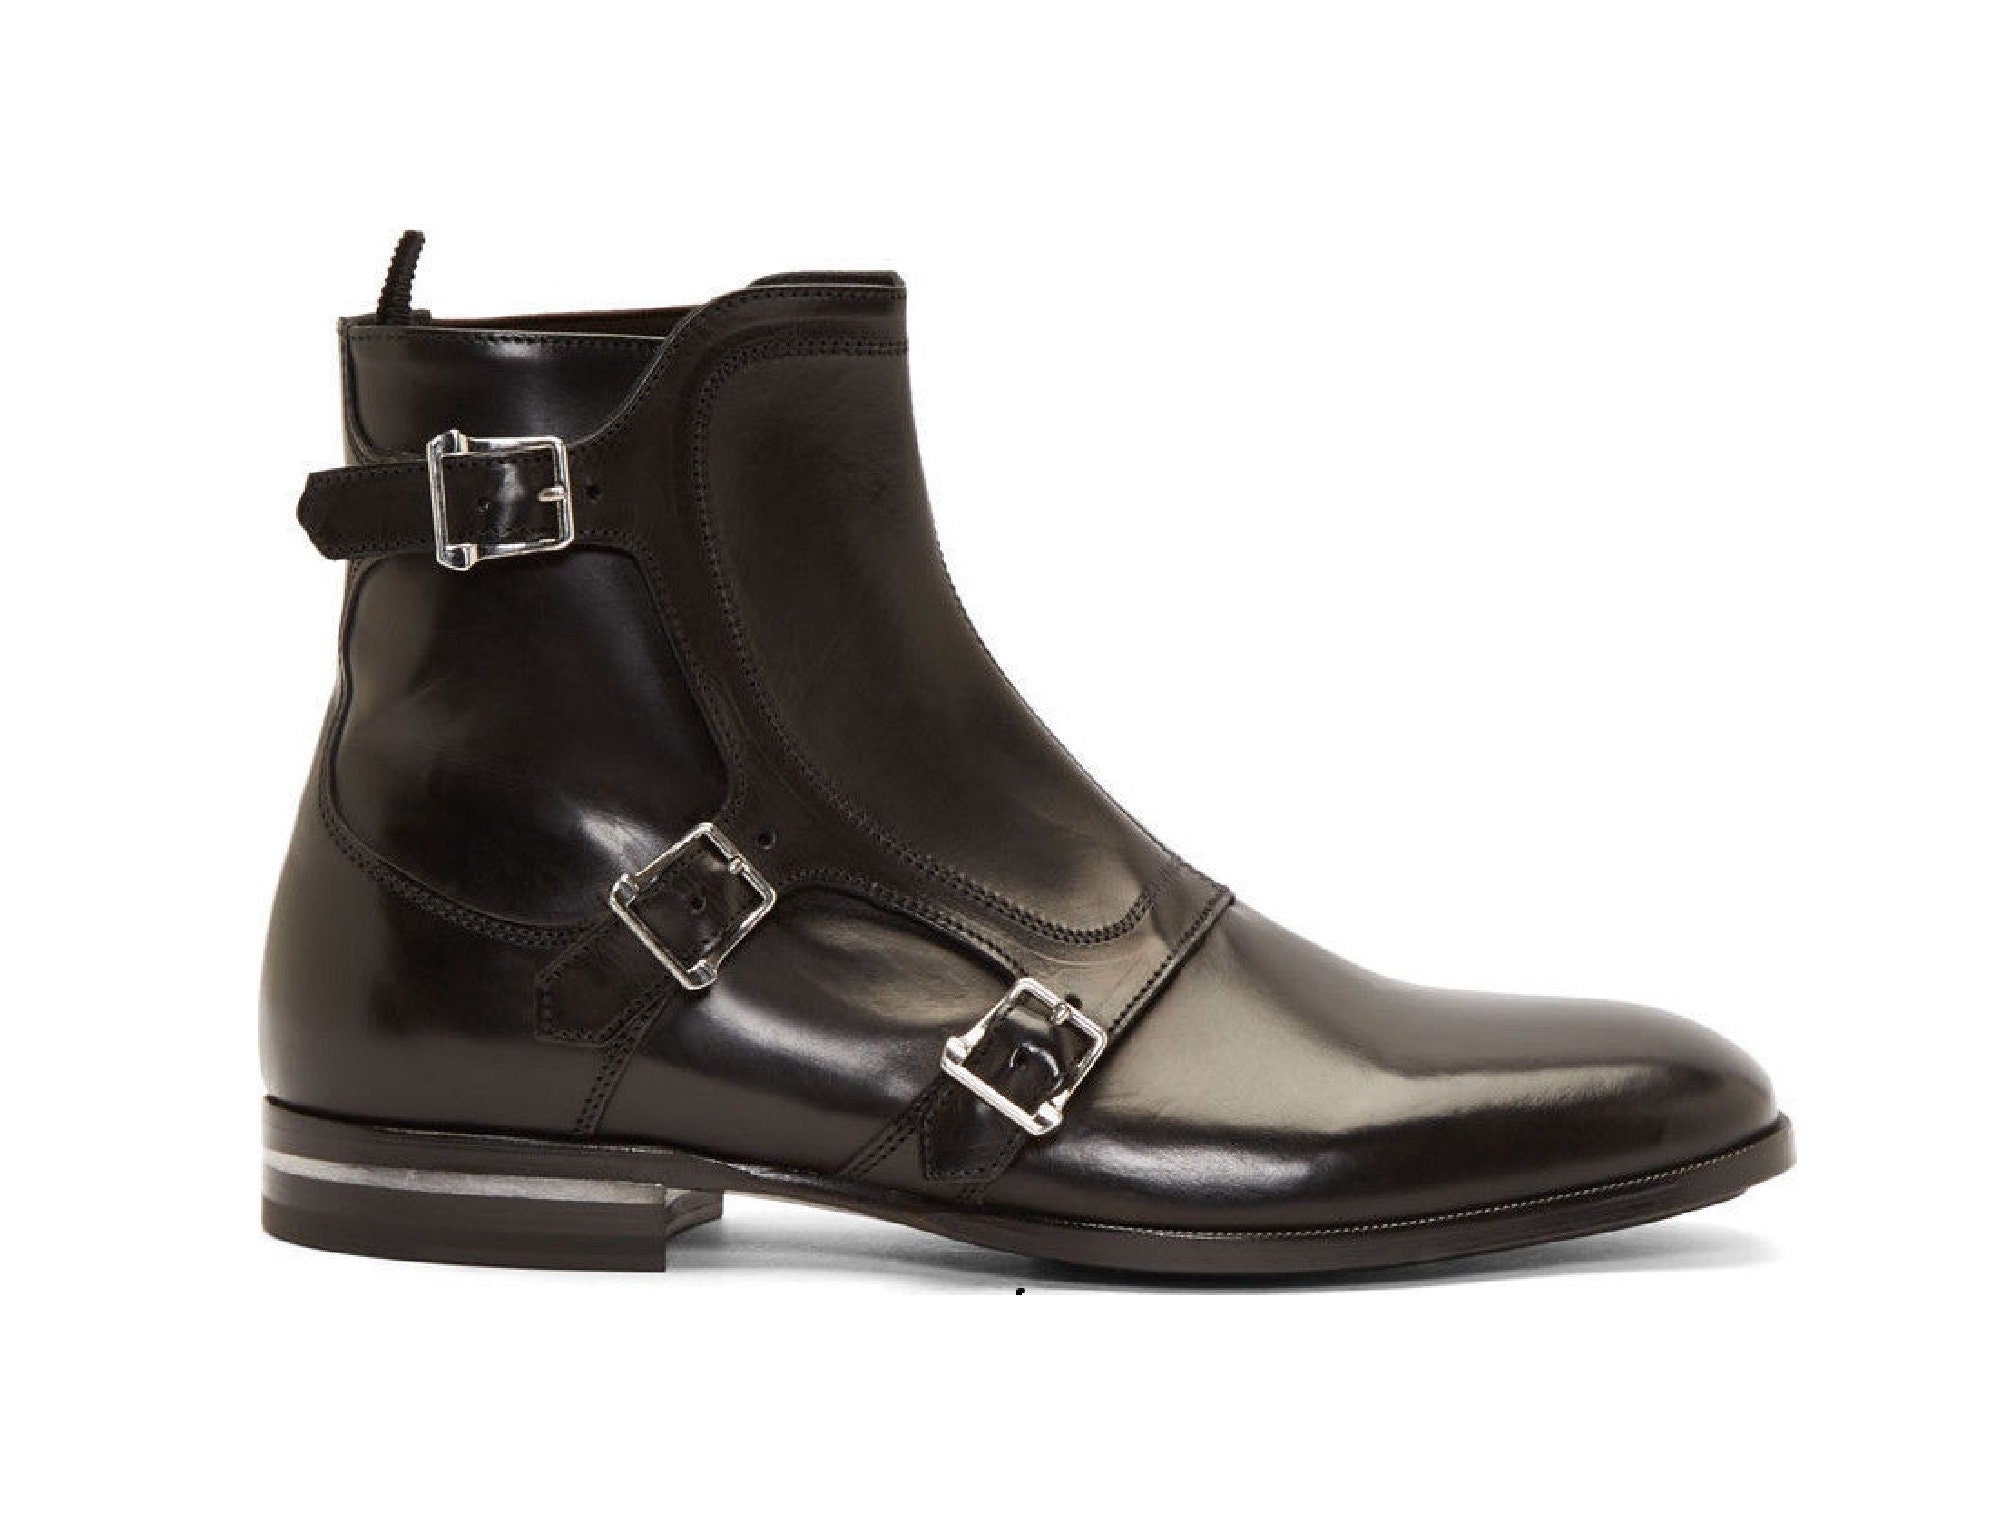 Men's Handmade Custom Made Genuine Leather Boots, Jodhpurs Ankle Buckle Formal Leather Boot